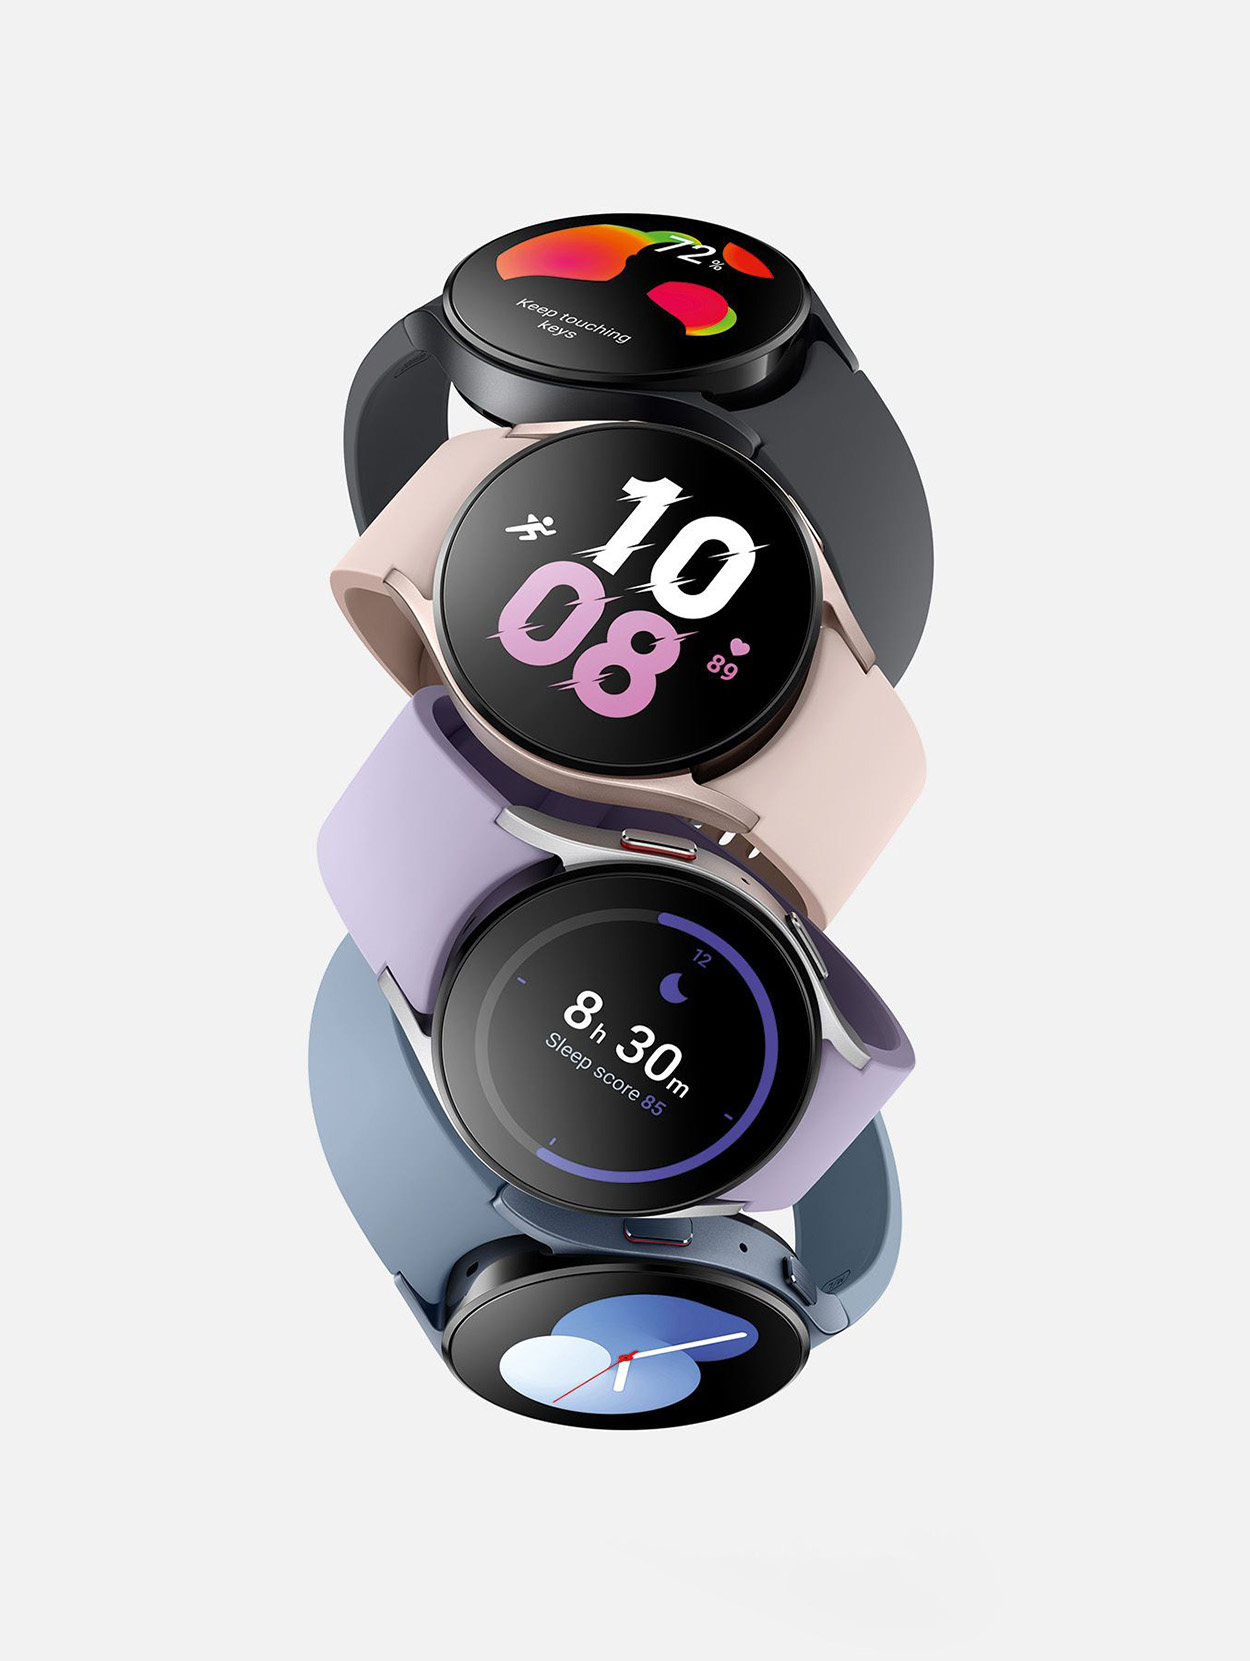 SAMSUNG Galaxy 5 M/L, Watch Silikon, grau Pro Smartwatch Titan